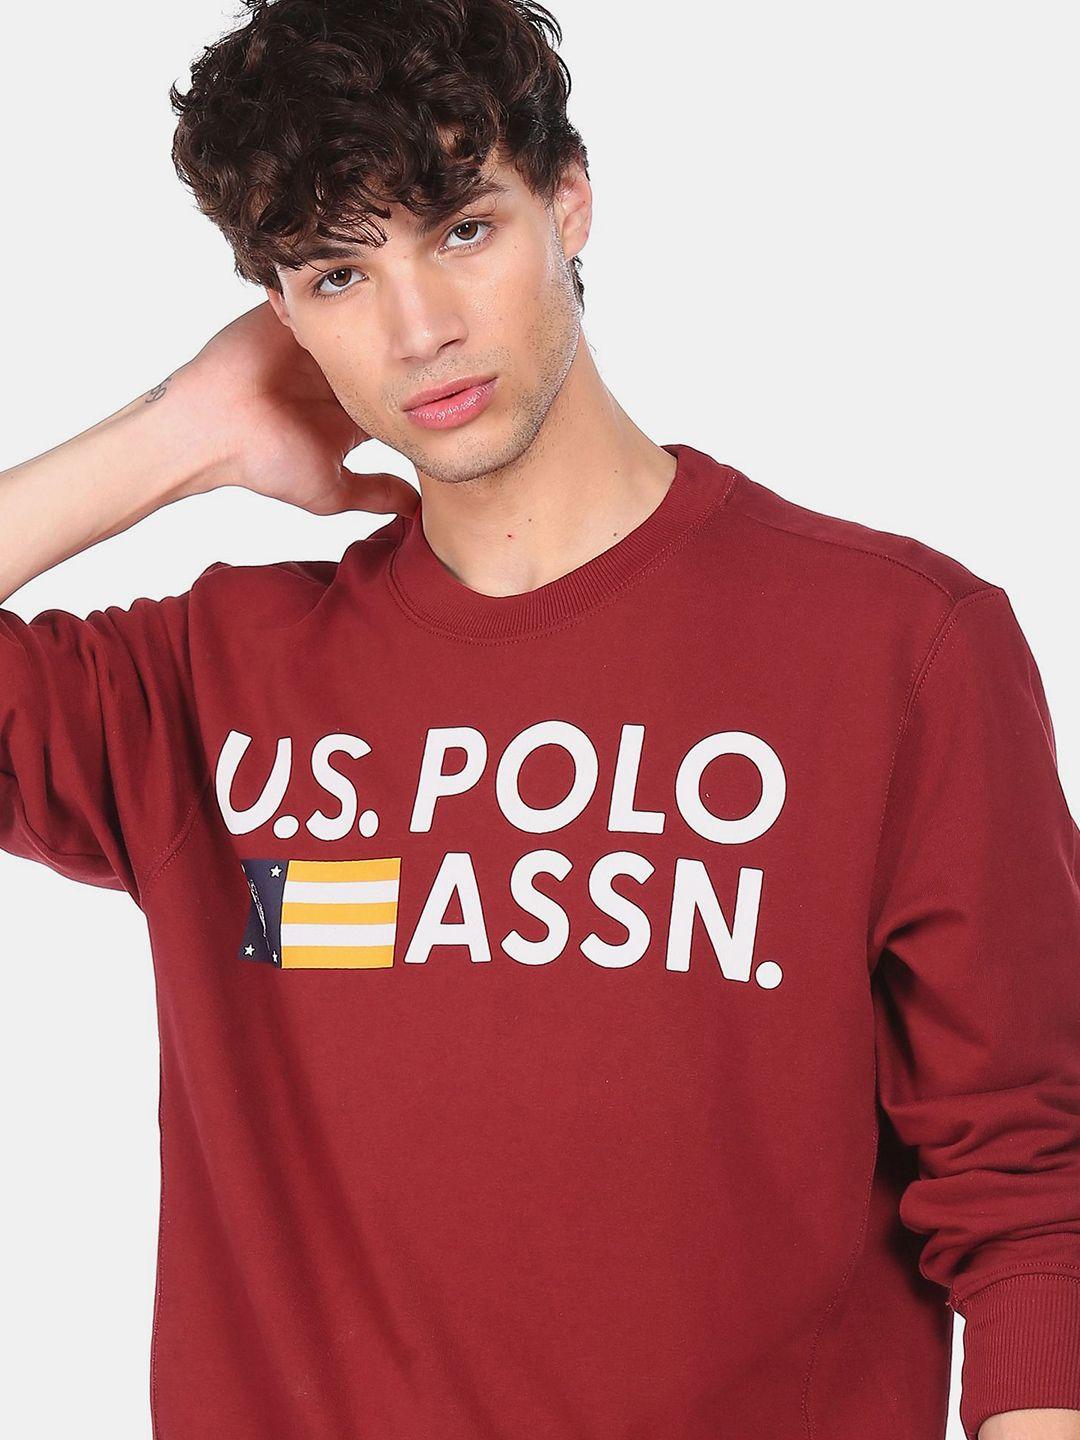 u.s. polo assn. denim co. men red printed crew neck sweatshirt